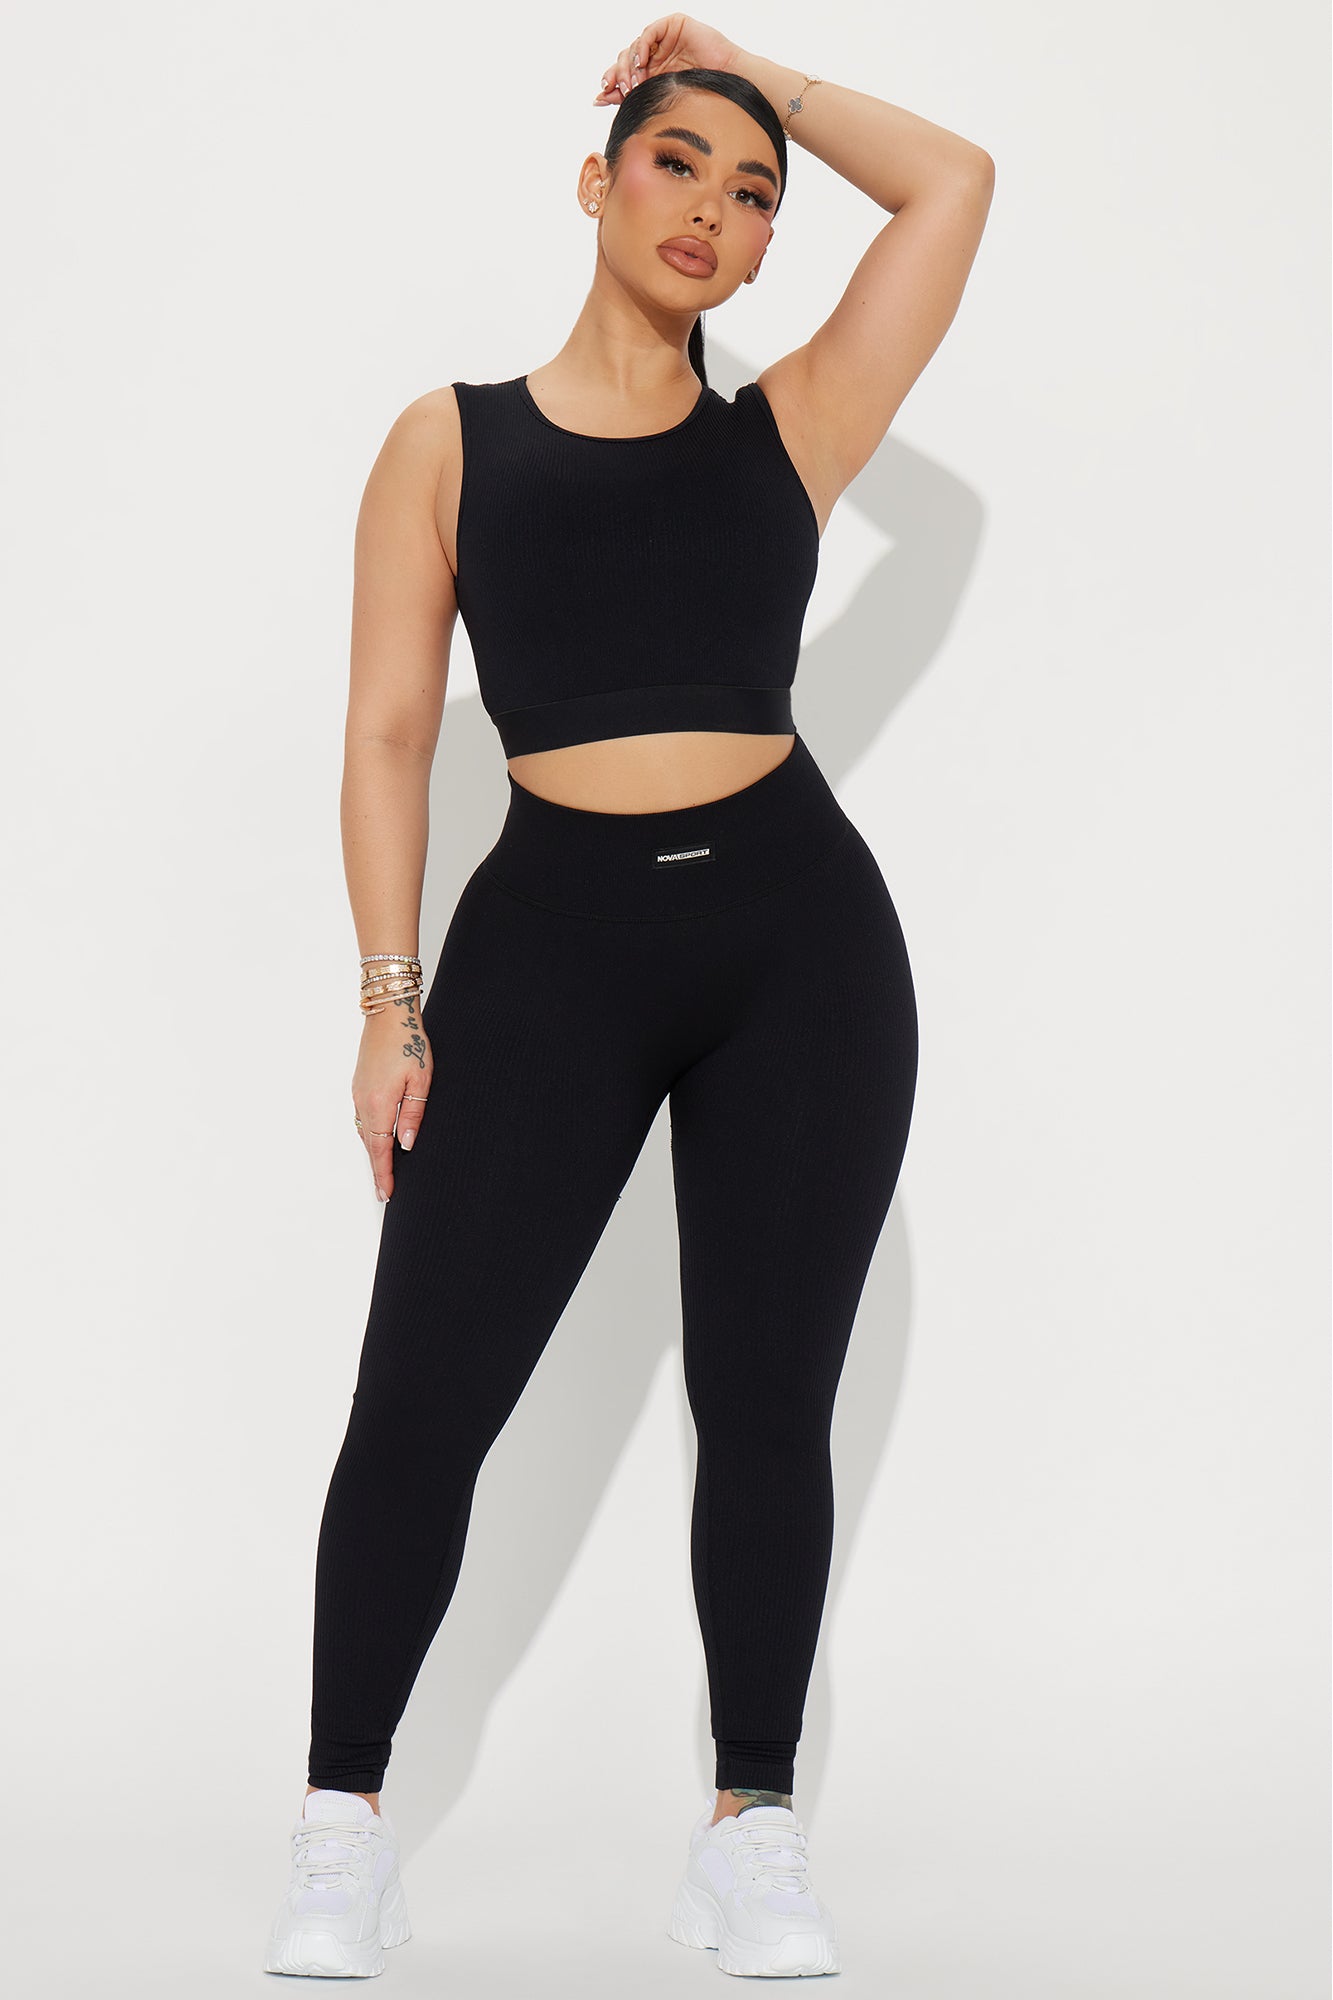 Forte Legging - Black  Black leggings, Stylish activewear, Activewear  fashion